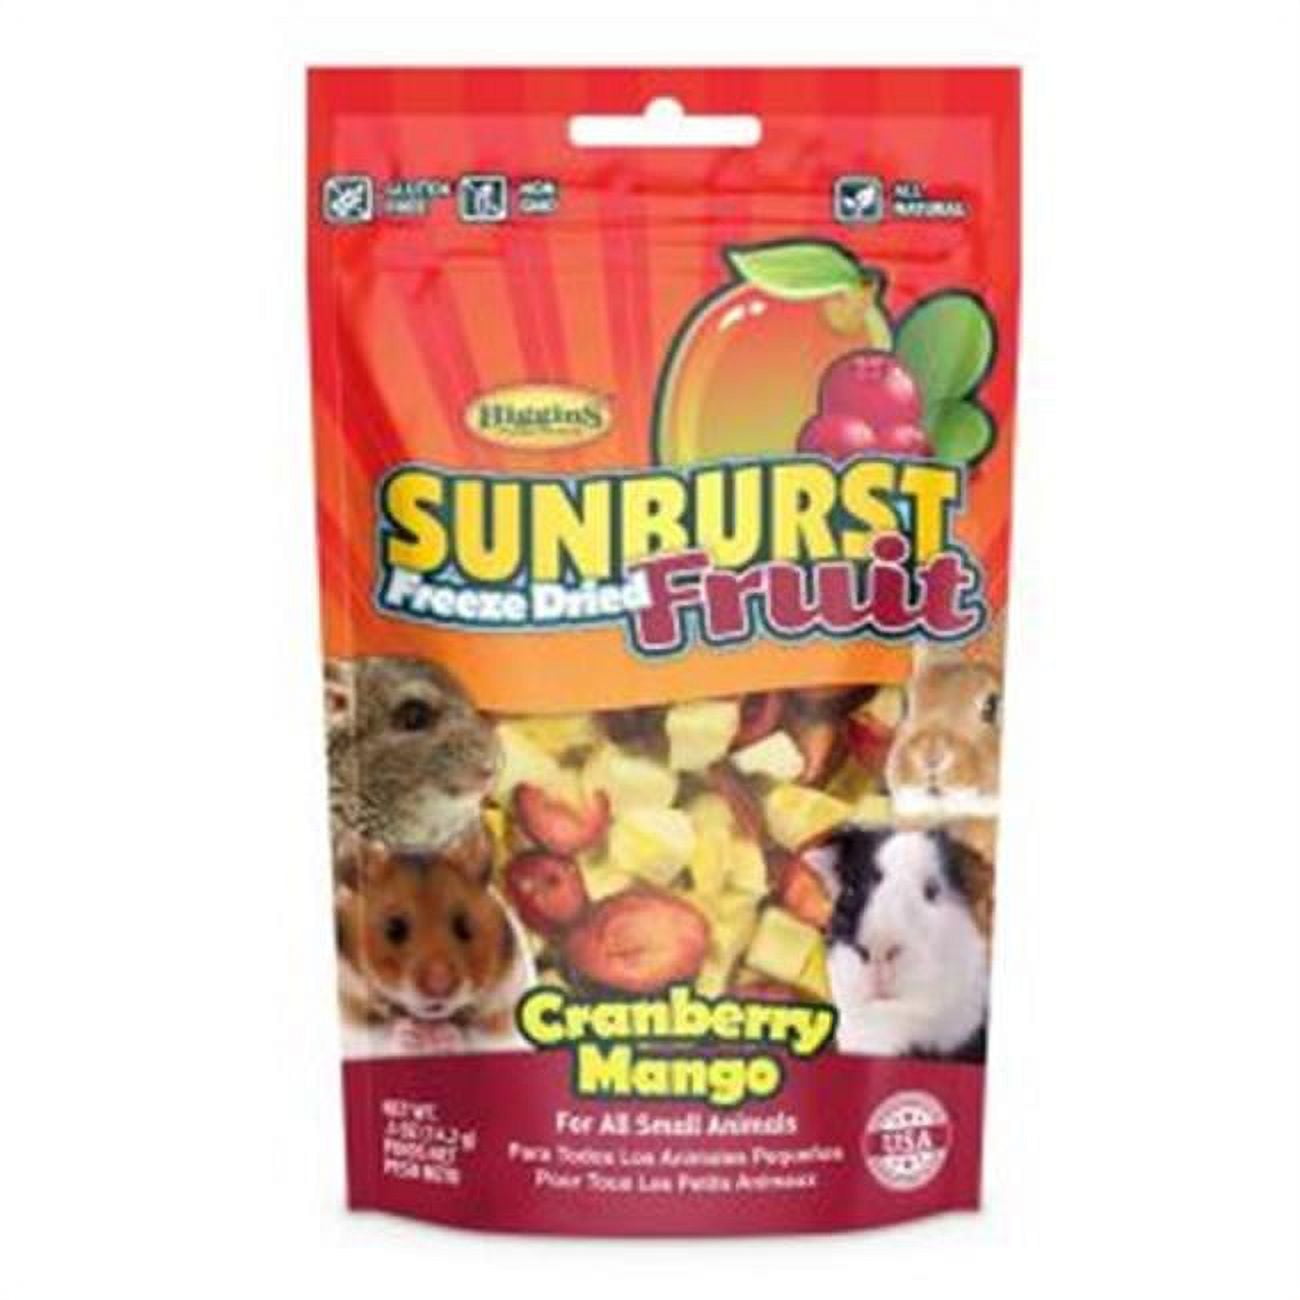 Hs32320 0.5 Oz Sunburst Freeze Dried Fruits For Small Animals Pet Foods - Cranberry & Mango